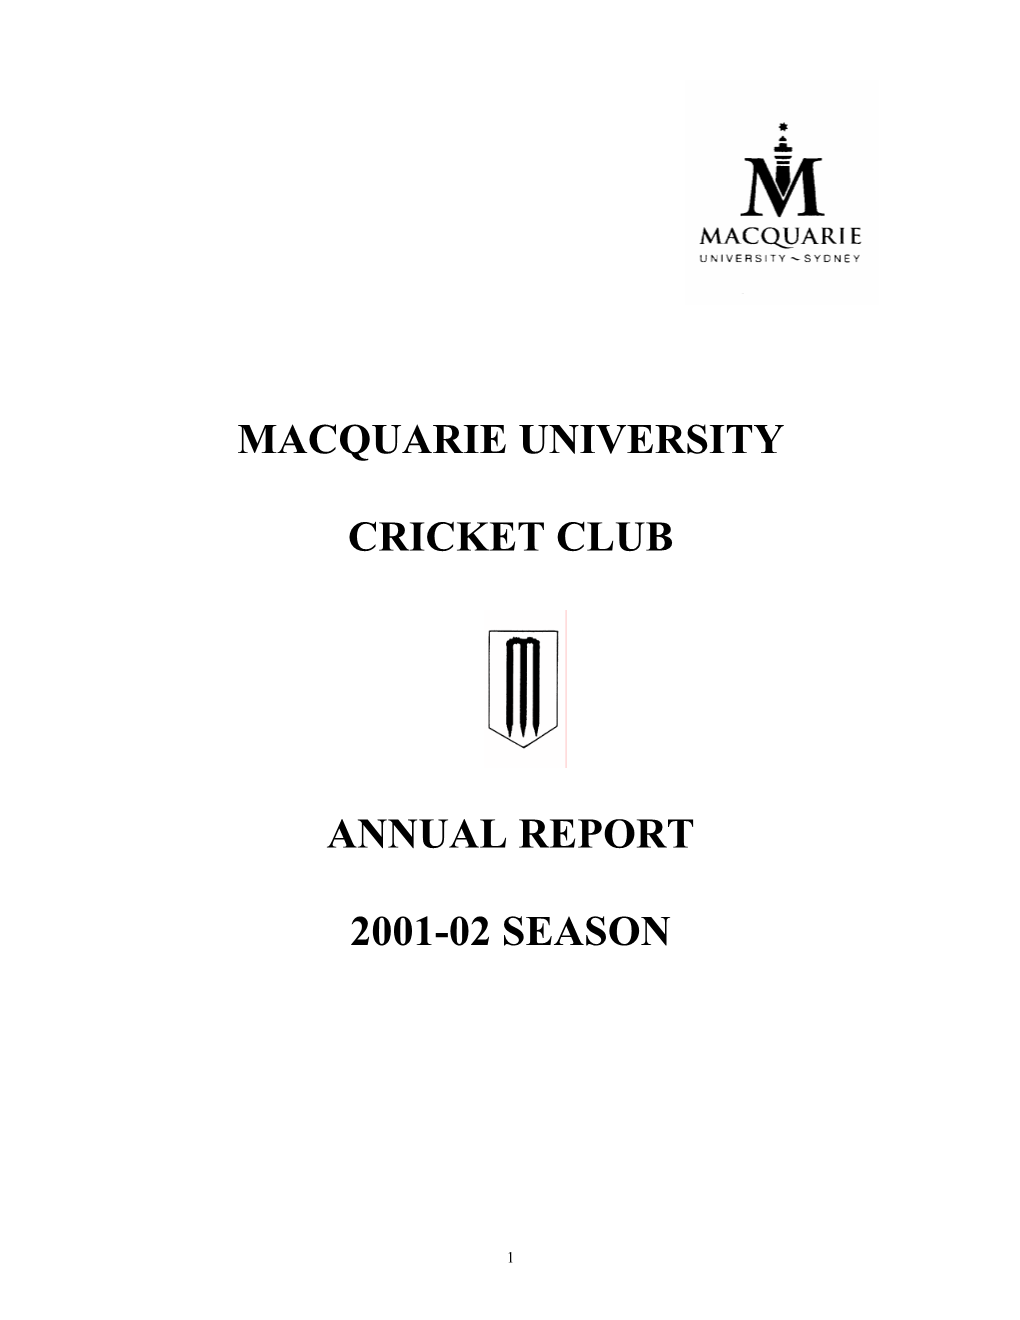 Macquarie University Cricket Club Annual Report 2001-02 Season